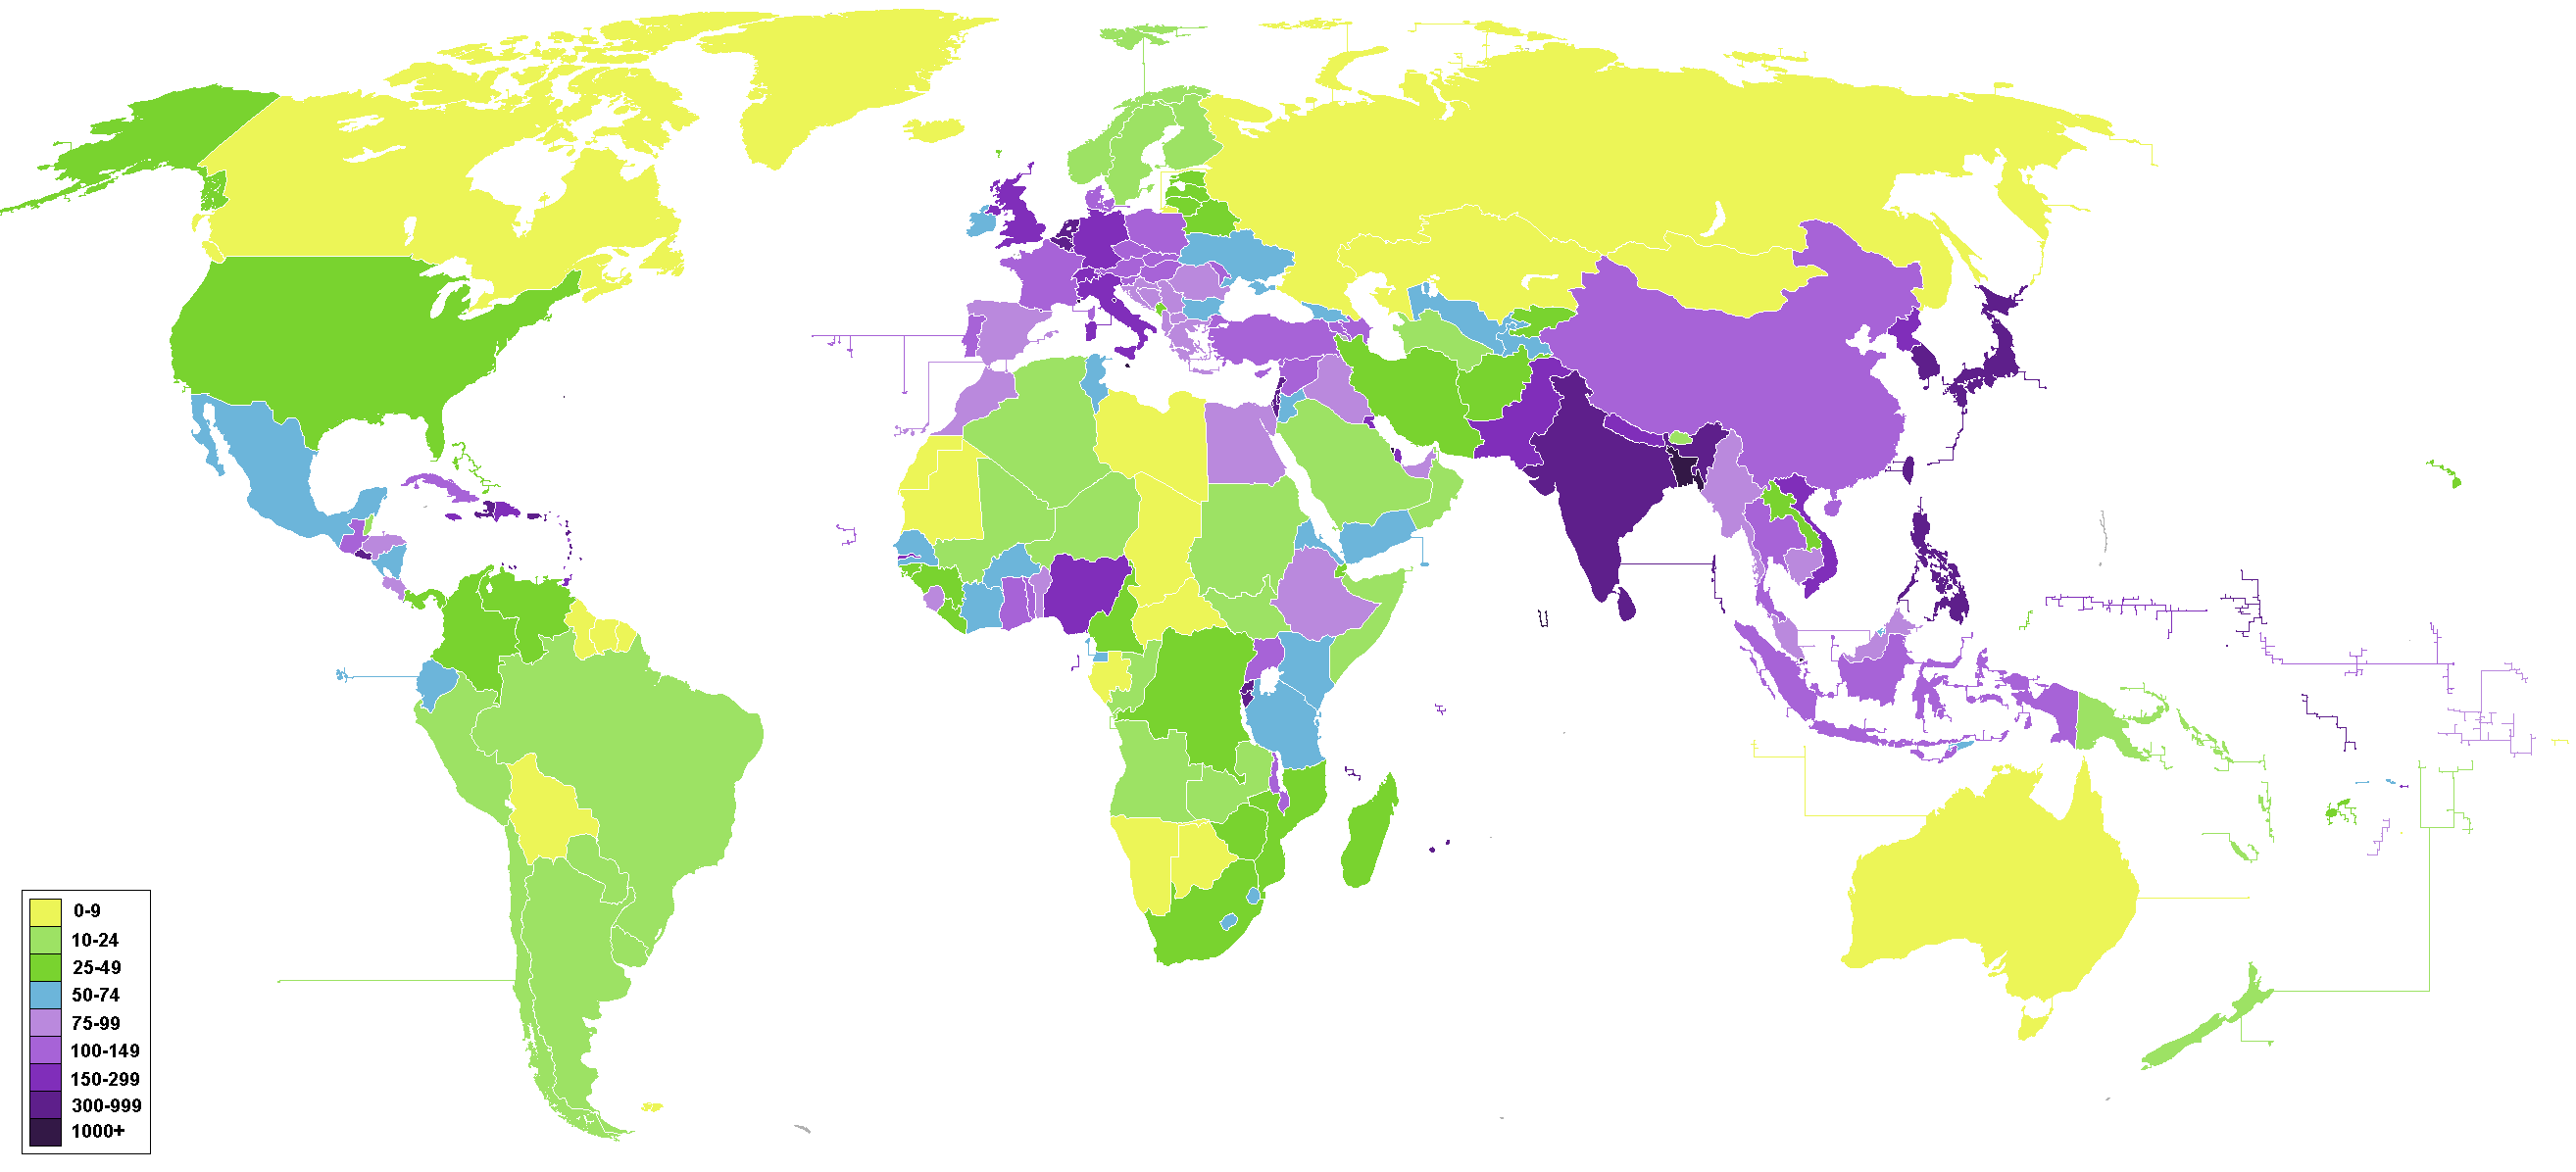 population density map of major us cities